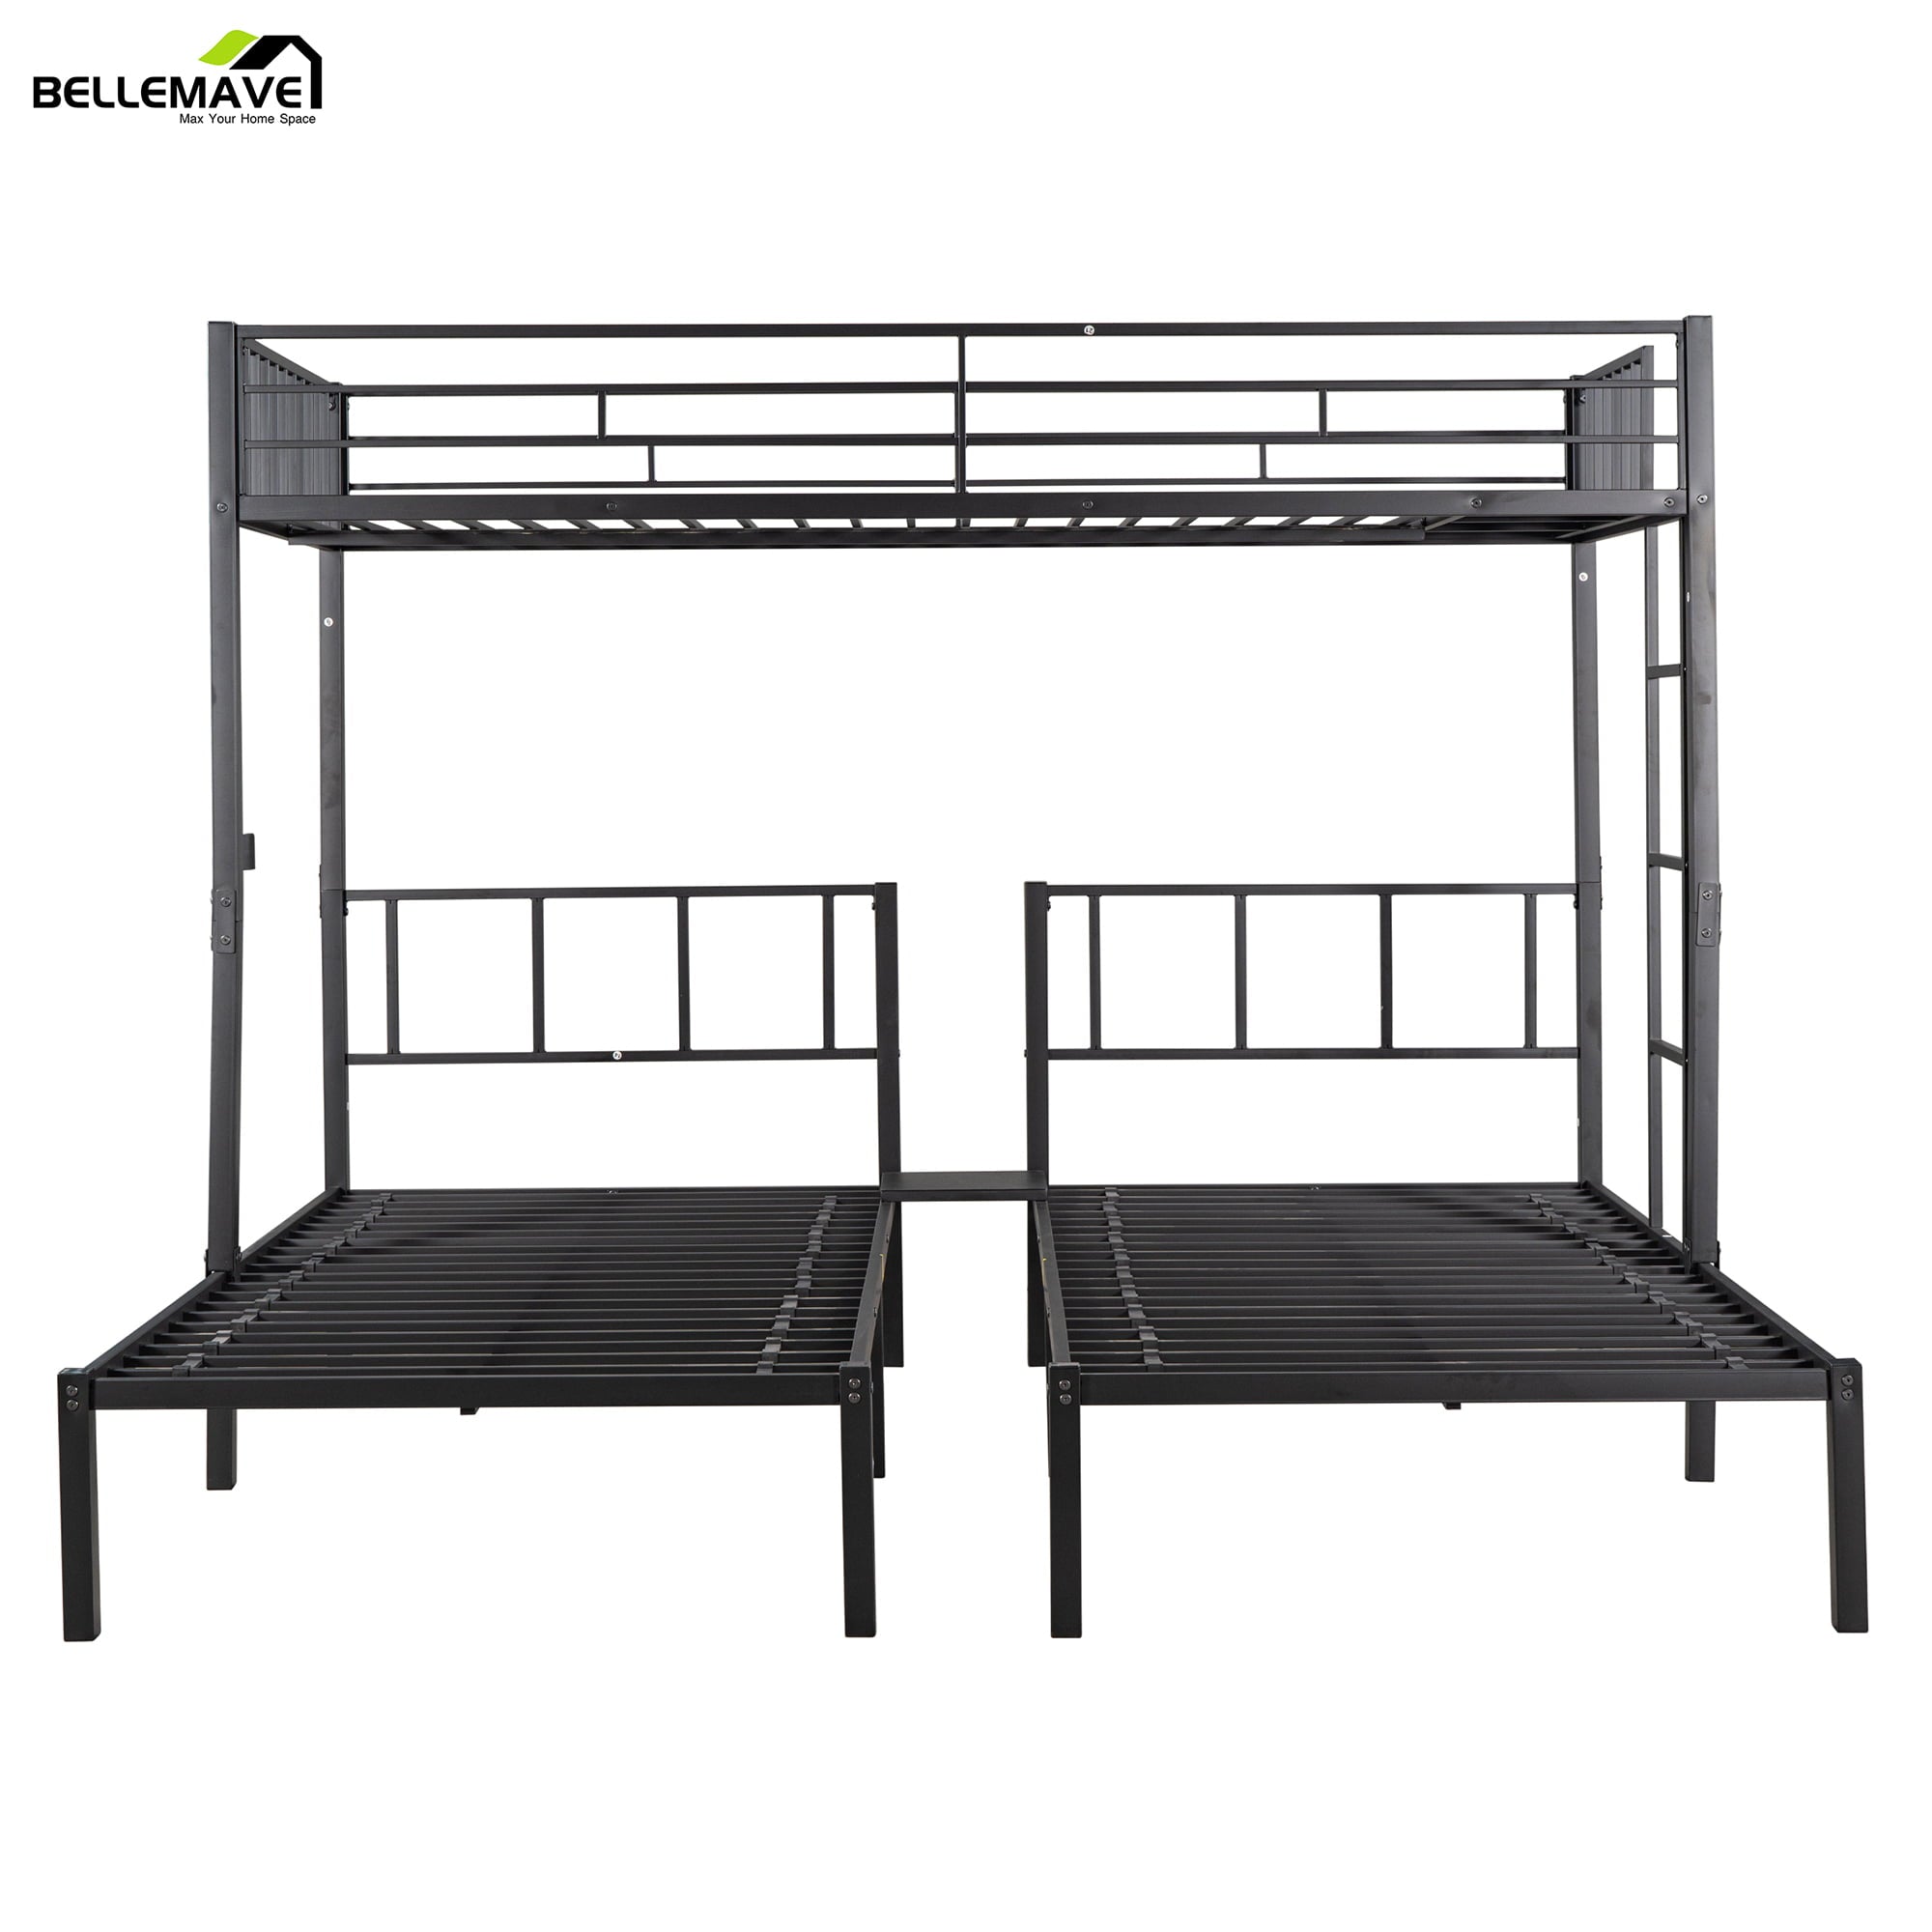 Bellemave Metal Triple Bunk Bed with Ladder, Twin over Twin over Twin Bunk Bed for Kids, Boys & Girls in Bedroom, Convert into 3 Twin Bed, Black